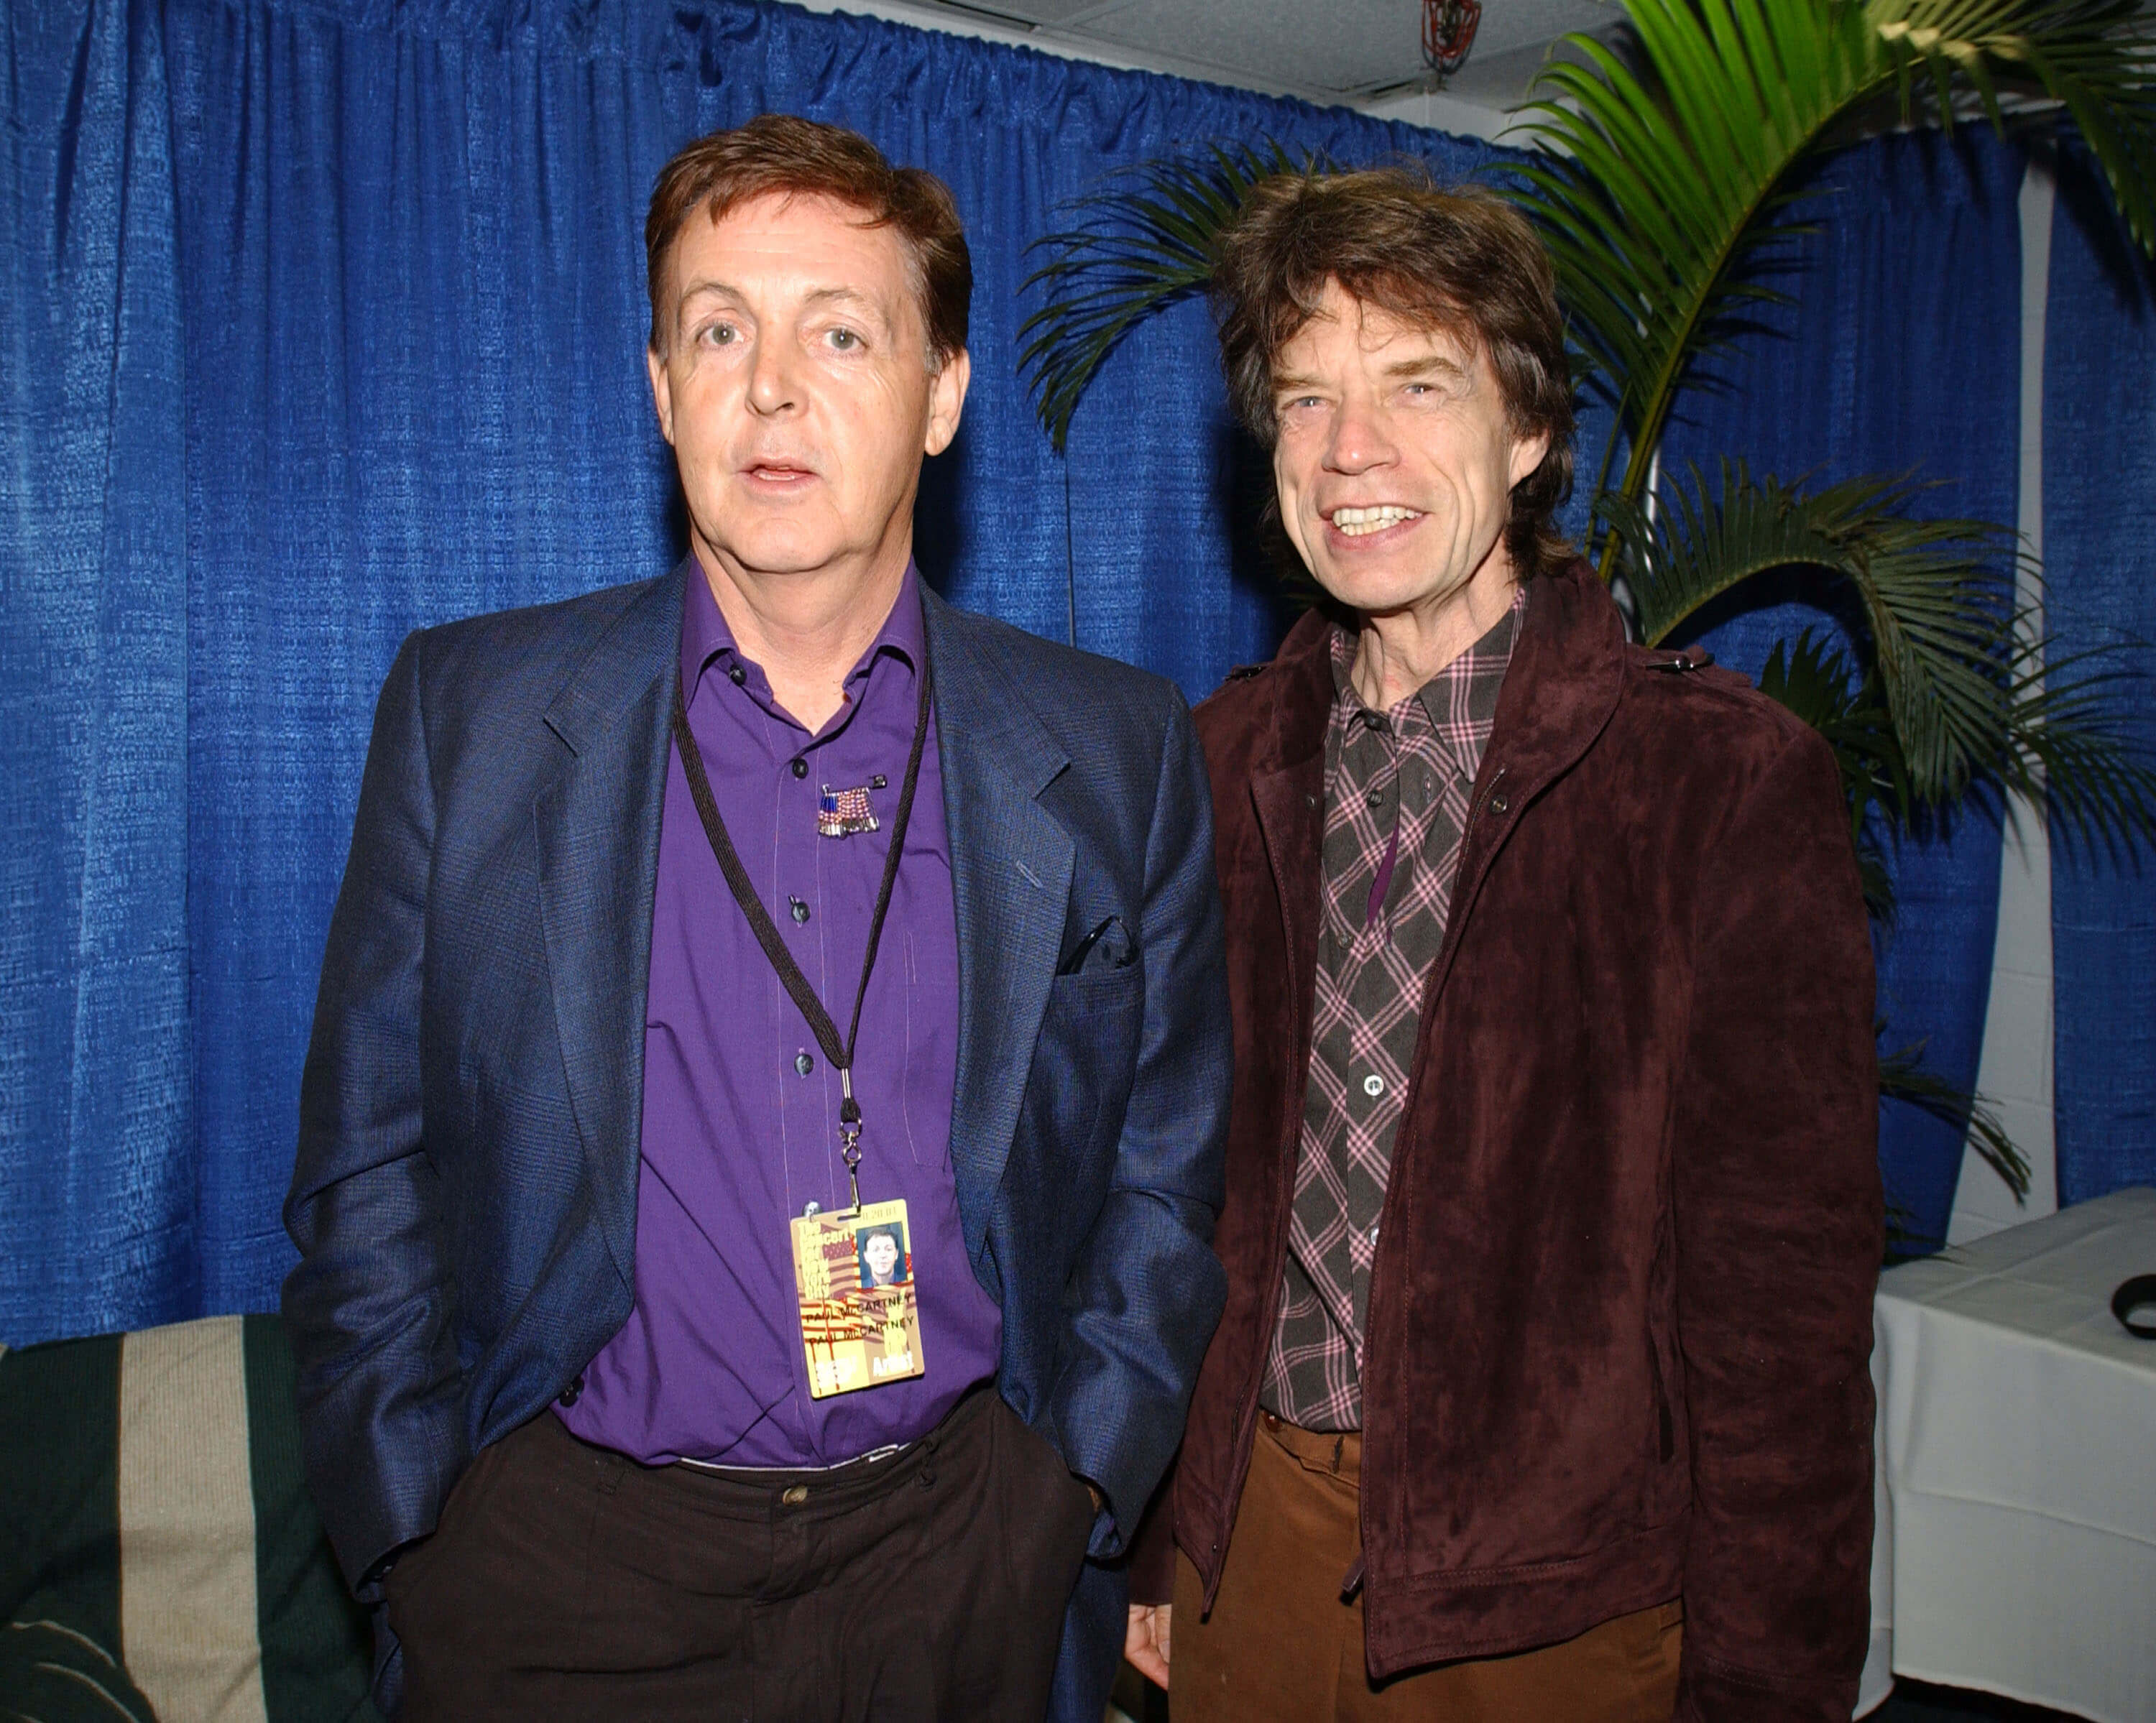 Paul McCartney with Mick Jagger